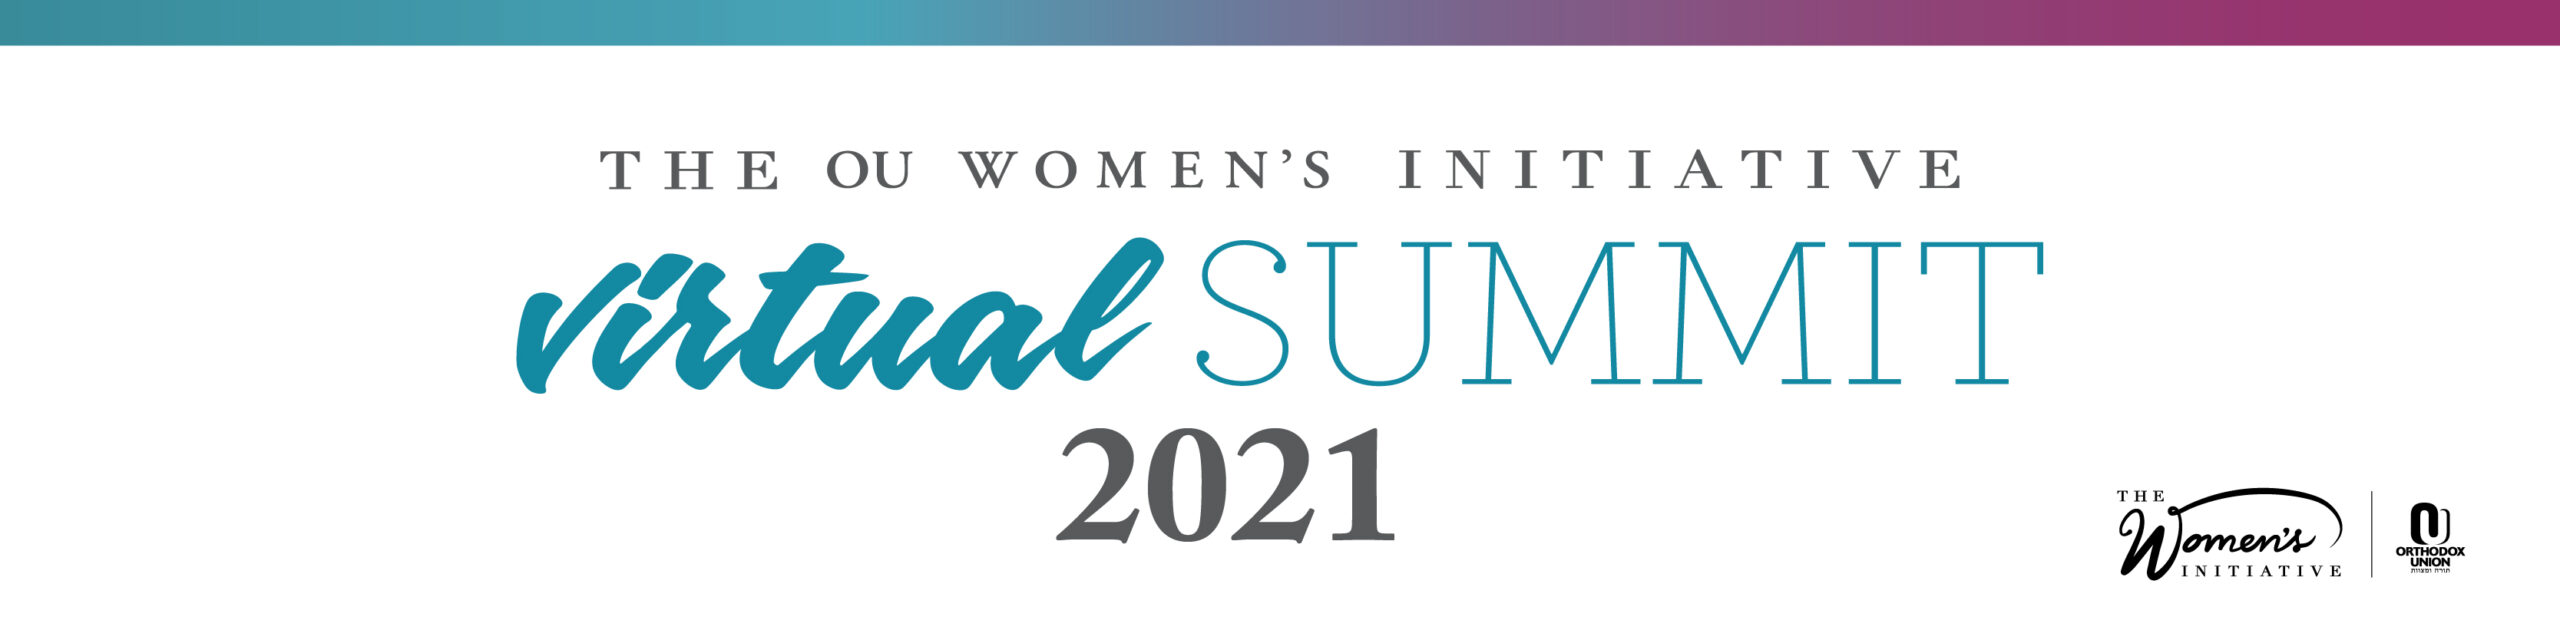 OU Women's Initiative Virtual Summit 2021